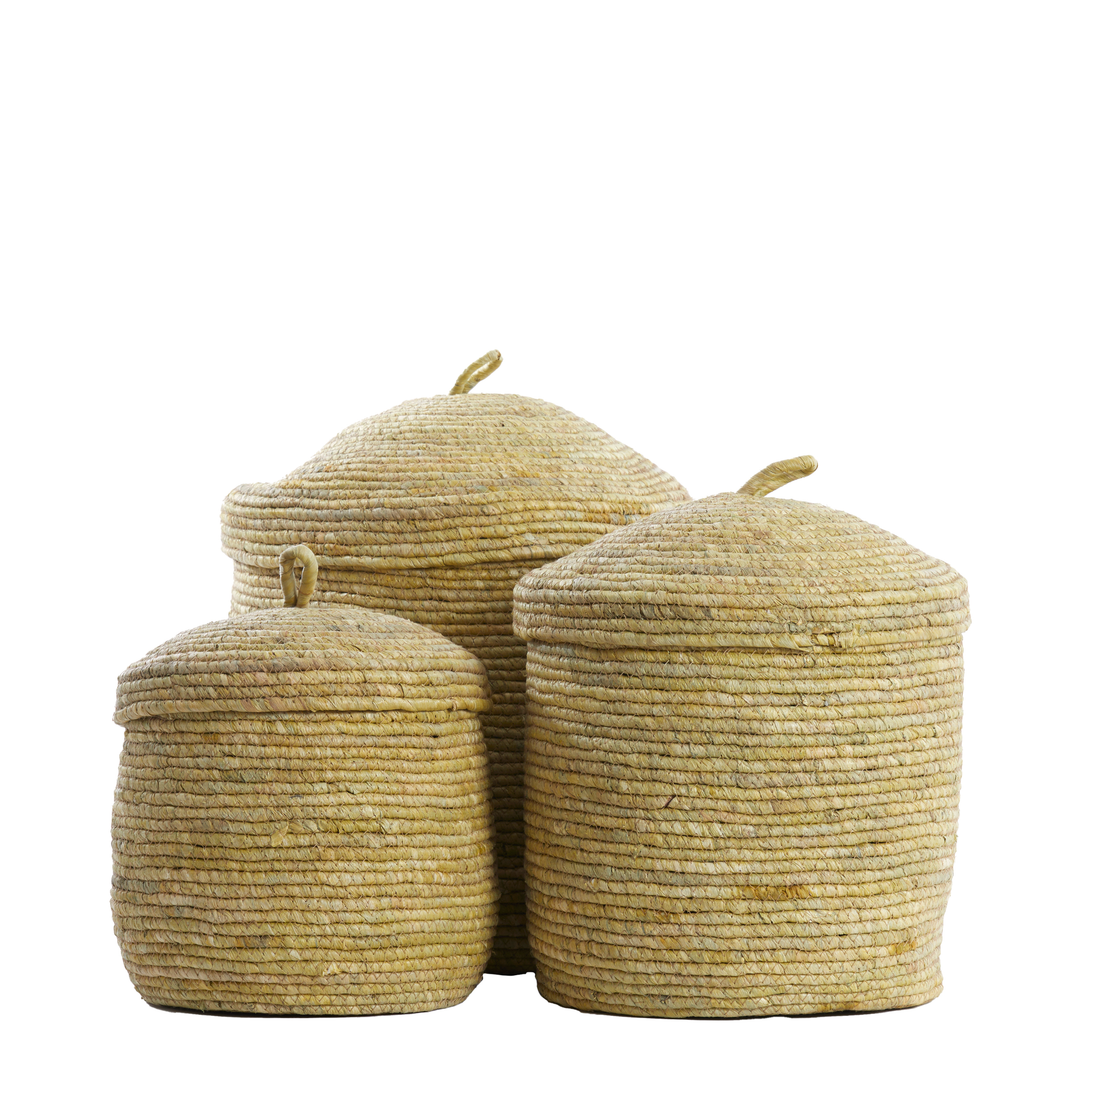 Baskets with lid set of 3 MANGALA yellow